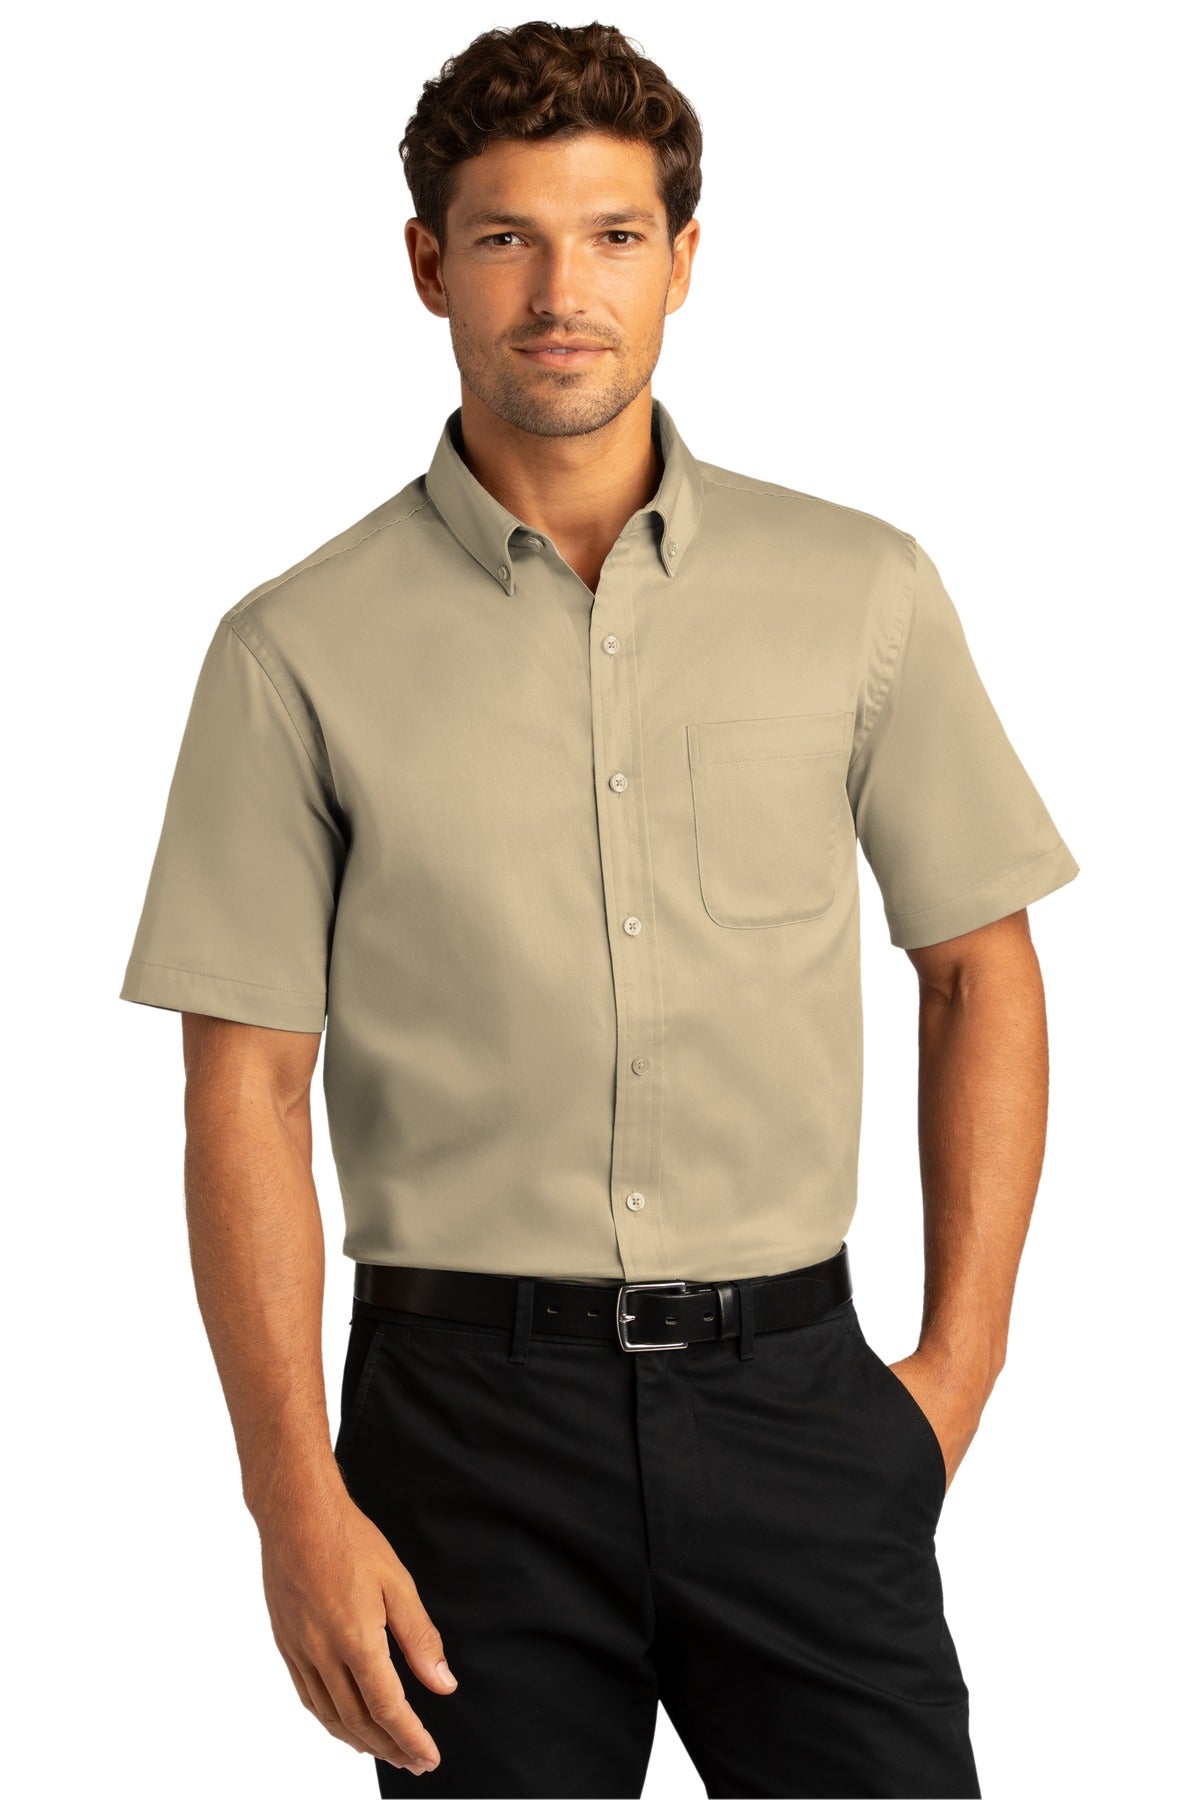 Port Authority® Short Sleeve SuperPro React™ Twill Shirt. W809 [Wheat] - DFW Impression